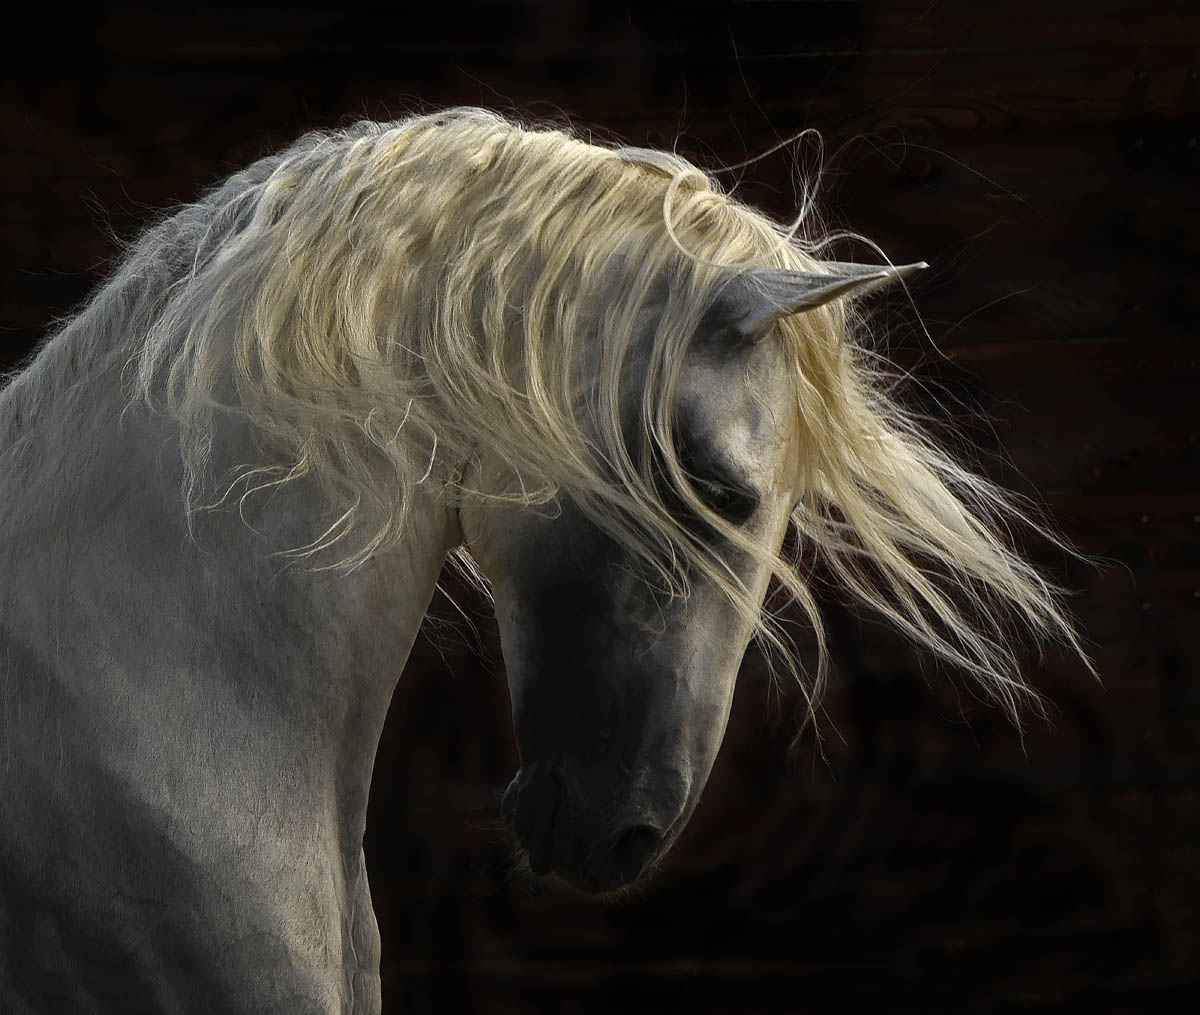 Unicorn-Photographic Print-Tony Stromberg-Sorrel Sky Gallery